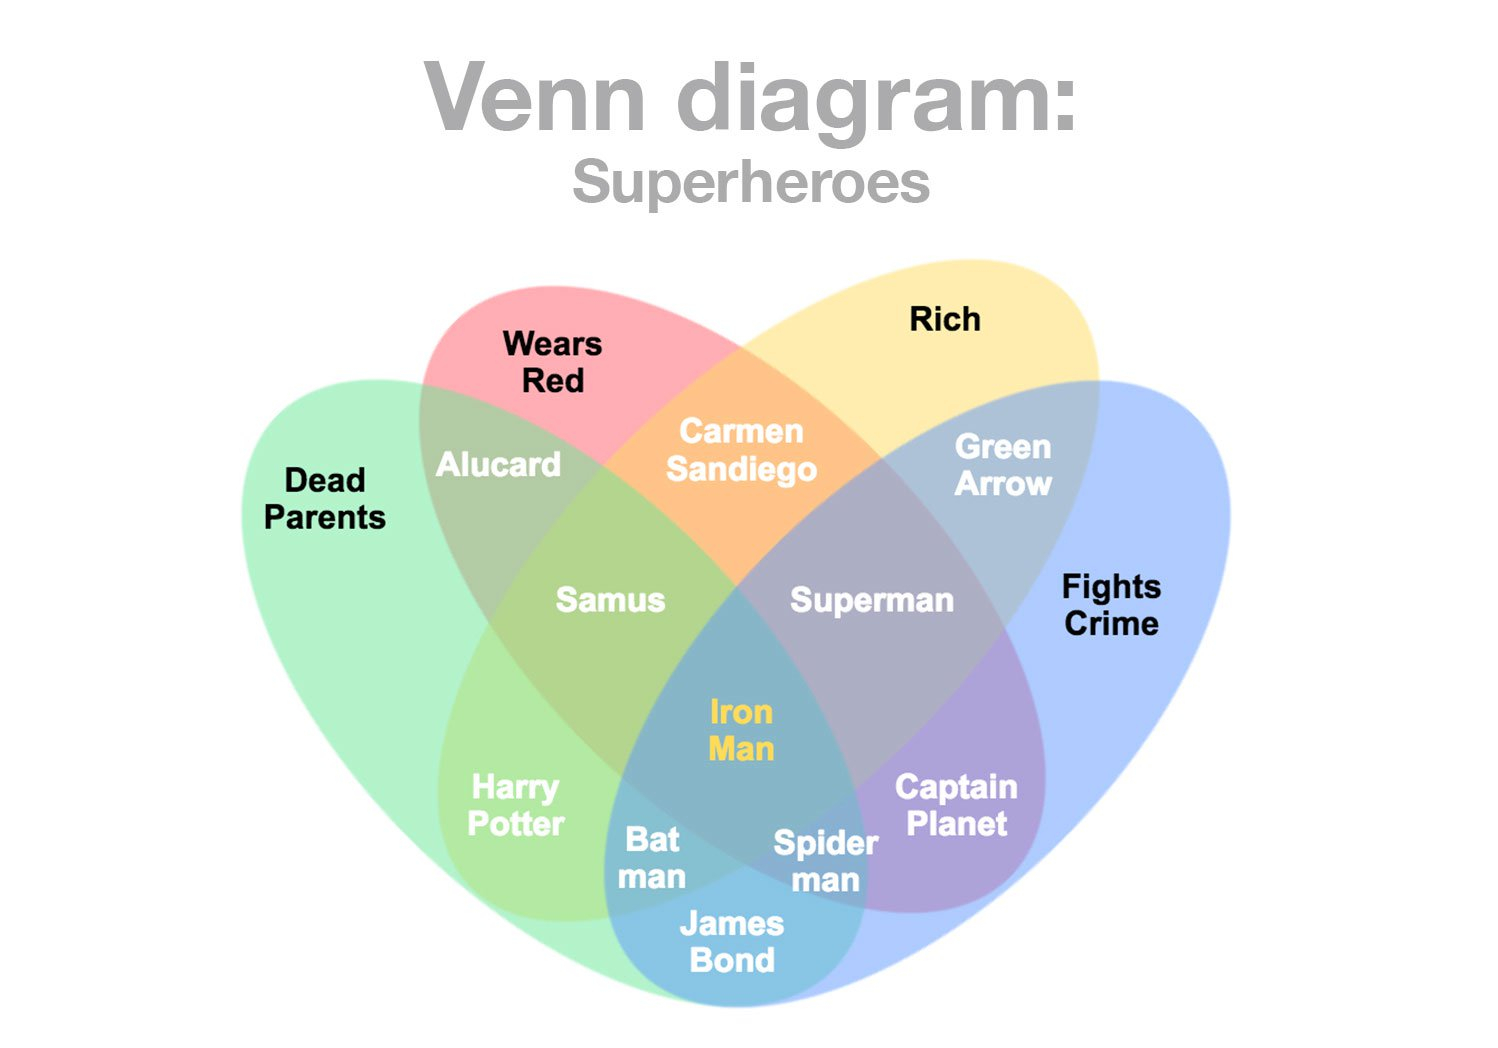 How To Make A Venn Diagram On Word Venn Diagram Maker How To Make Venn Diagrams Online Gliffy